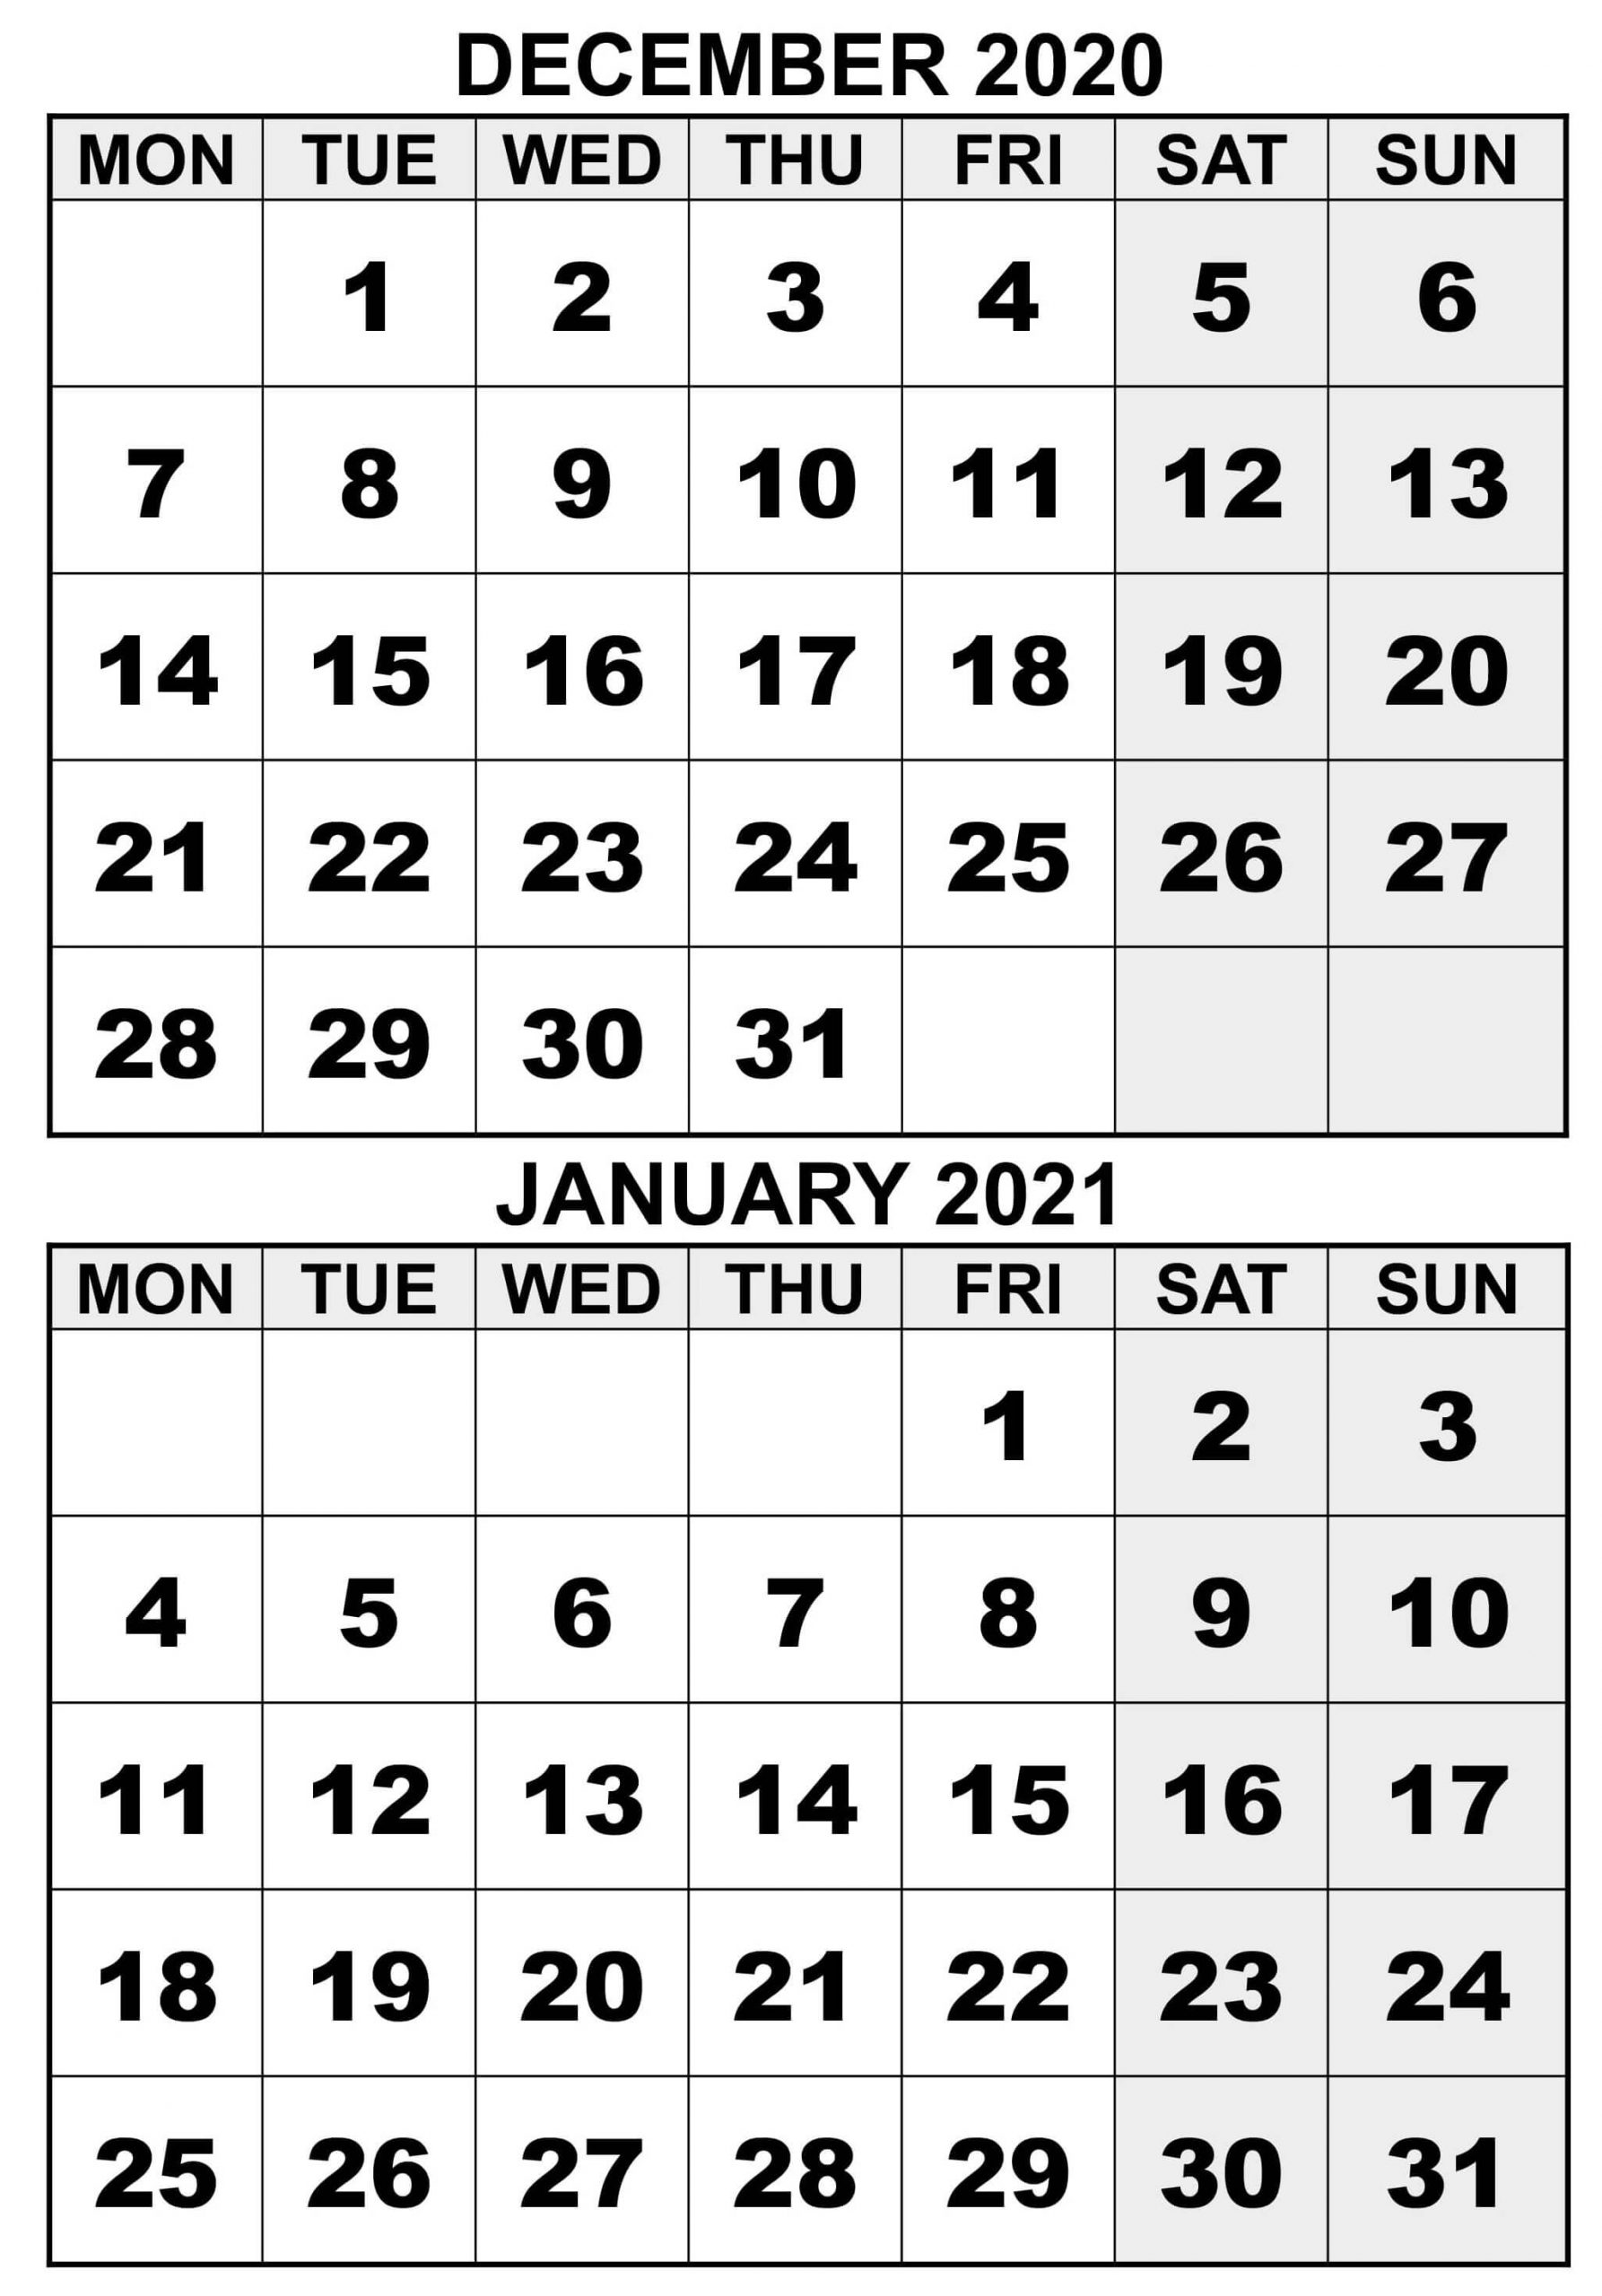 Blank 2020 December 2021 January Calendar With Holidays 2020 December 2021 January Calendar